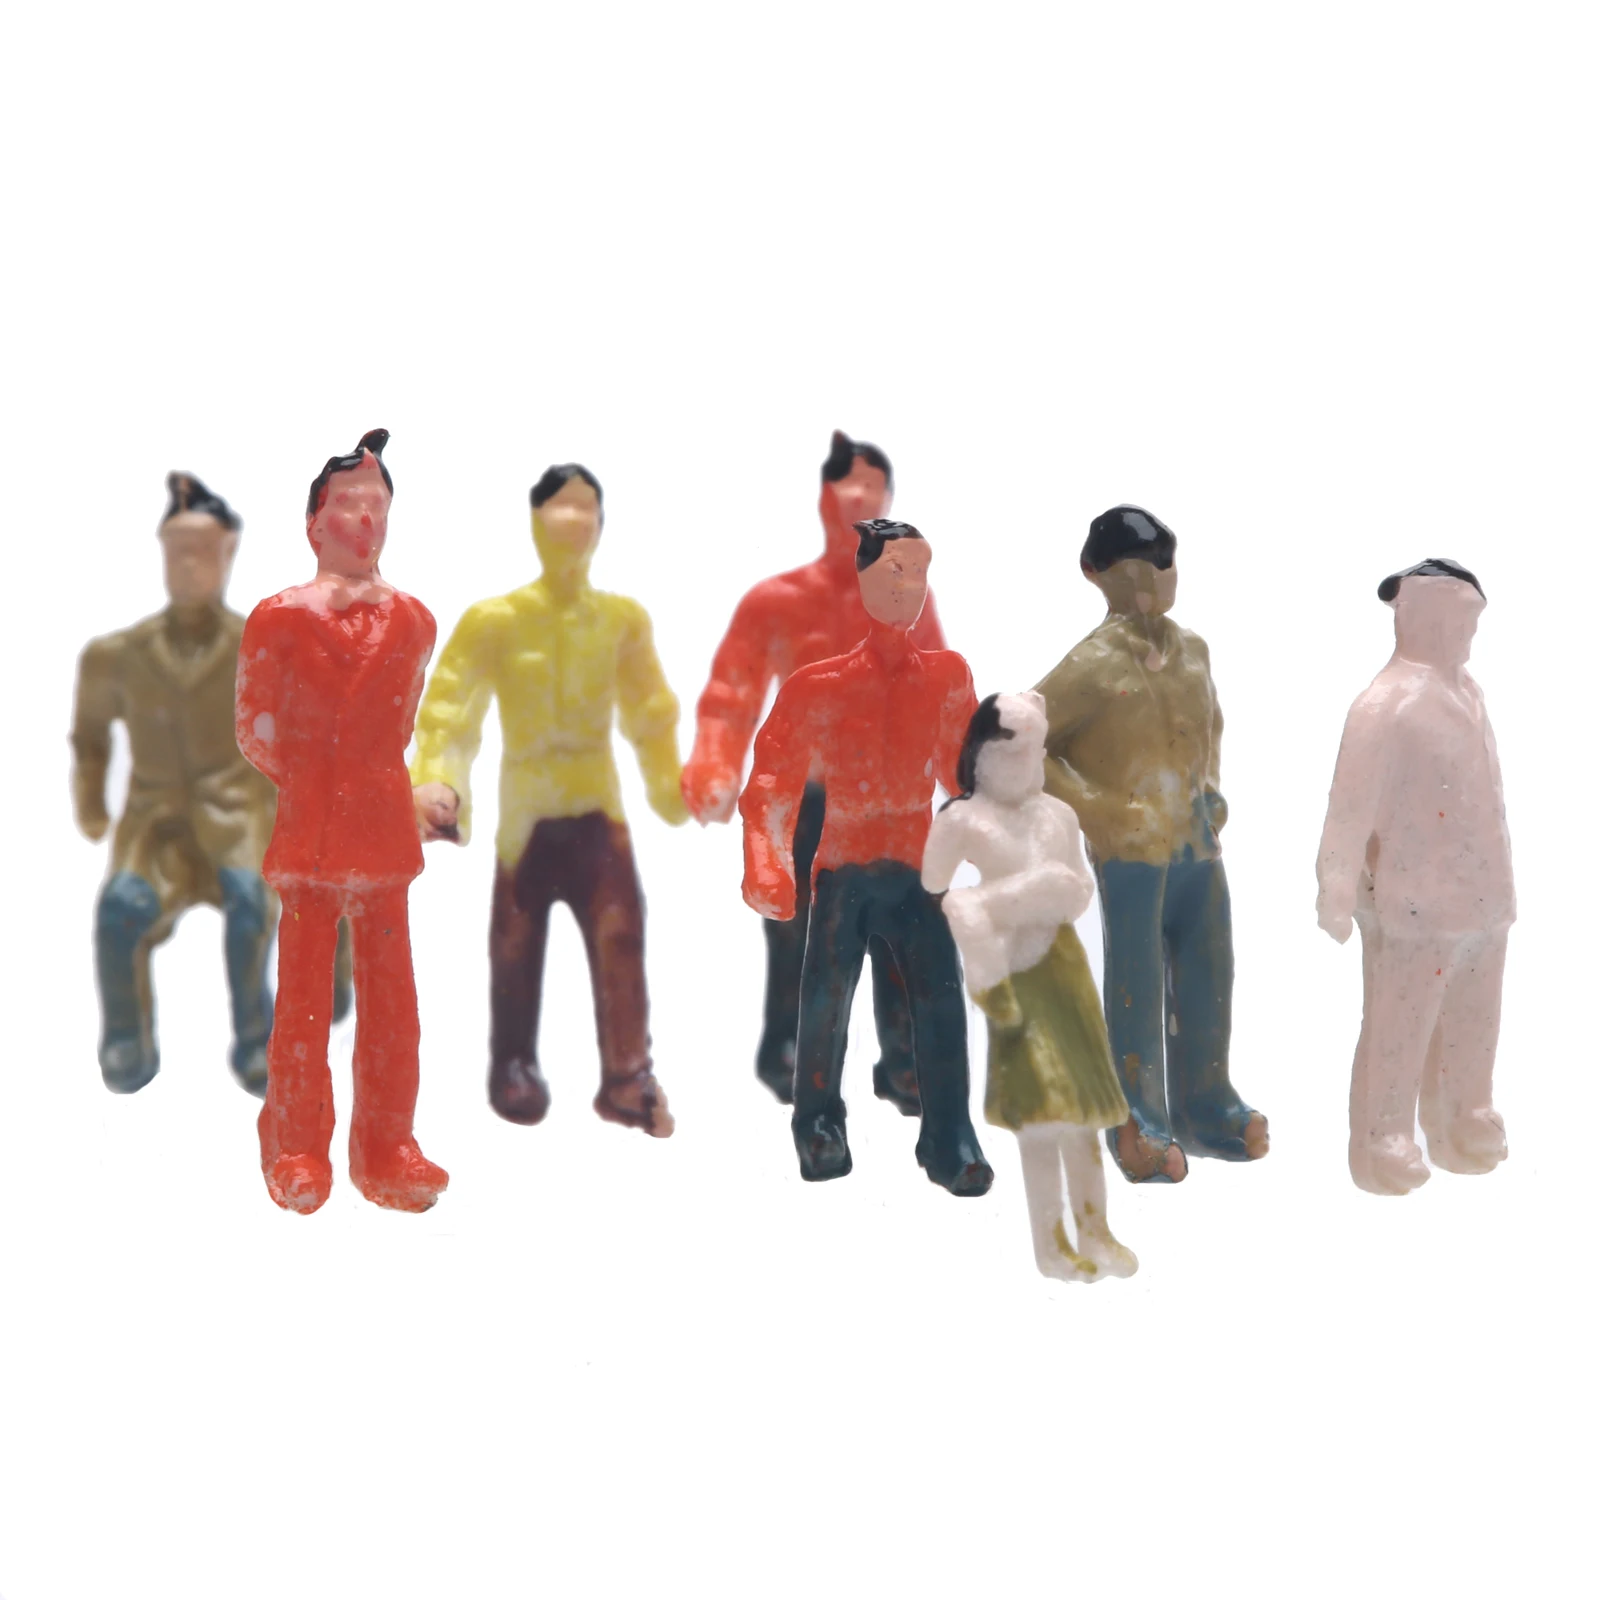 10pcs Painted Figure Model People Railway Train Layout Toys 1:30 Scale Hobbies